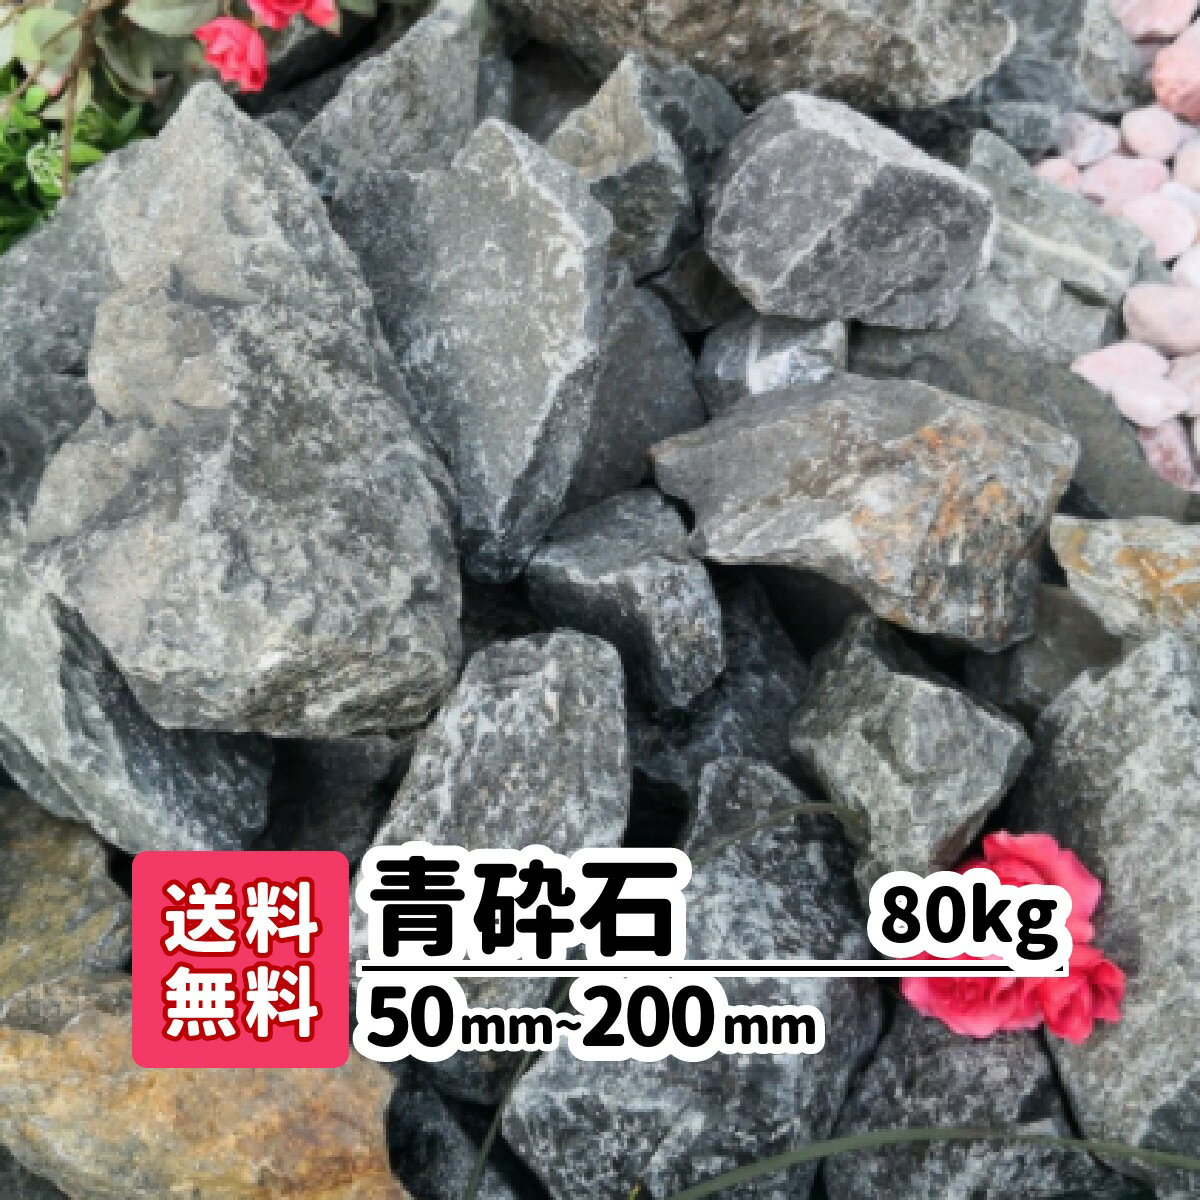 【送料無料】80kg 青砕石 50mm〜200mm(20